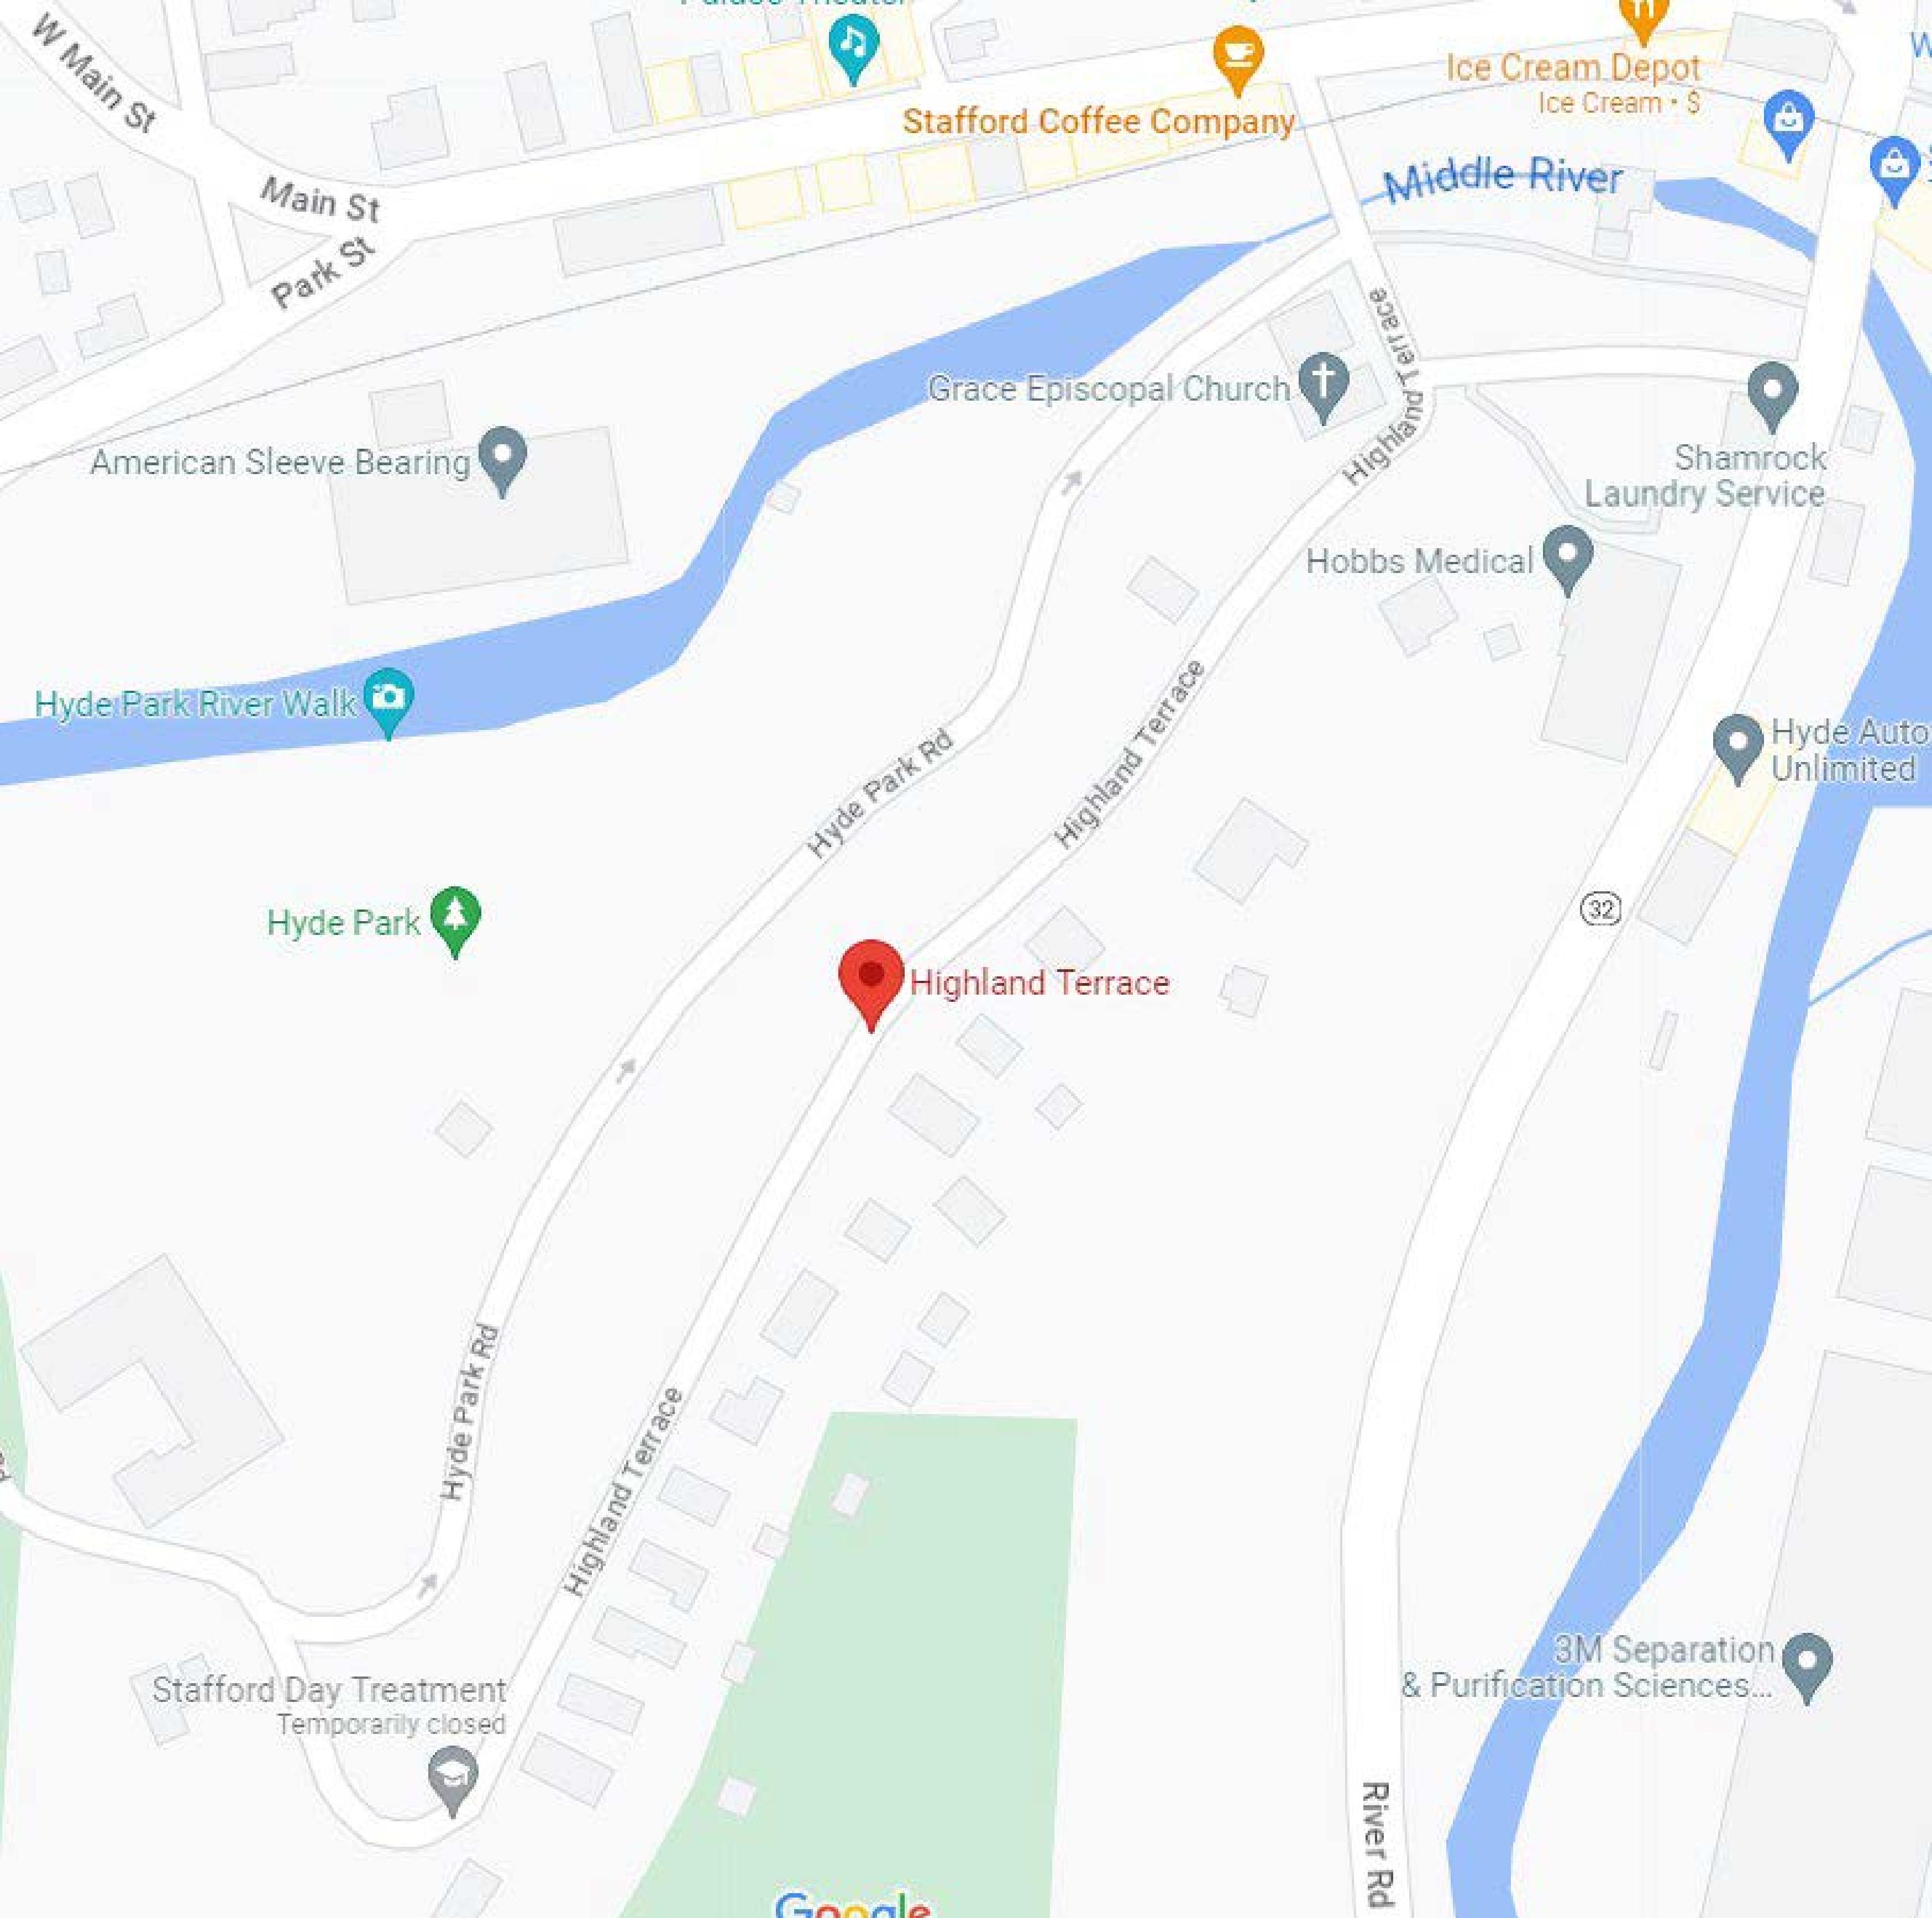 Google map image of Stafford CT